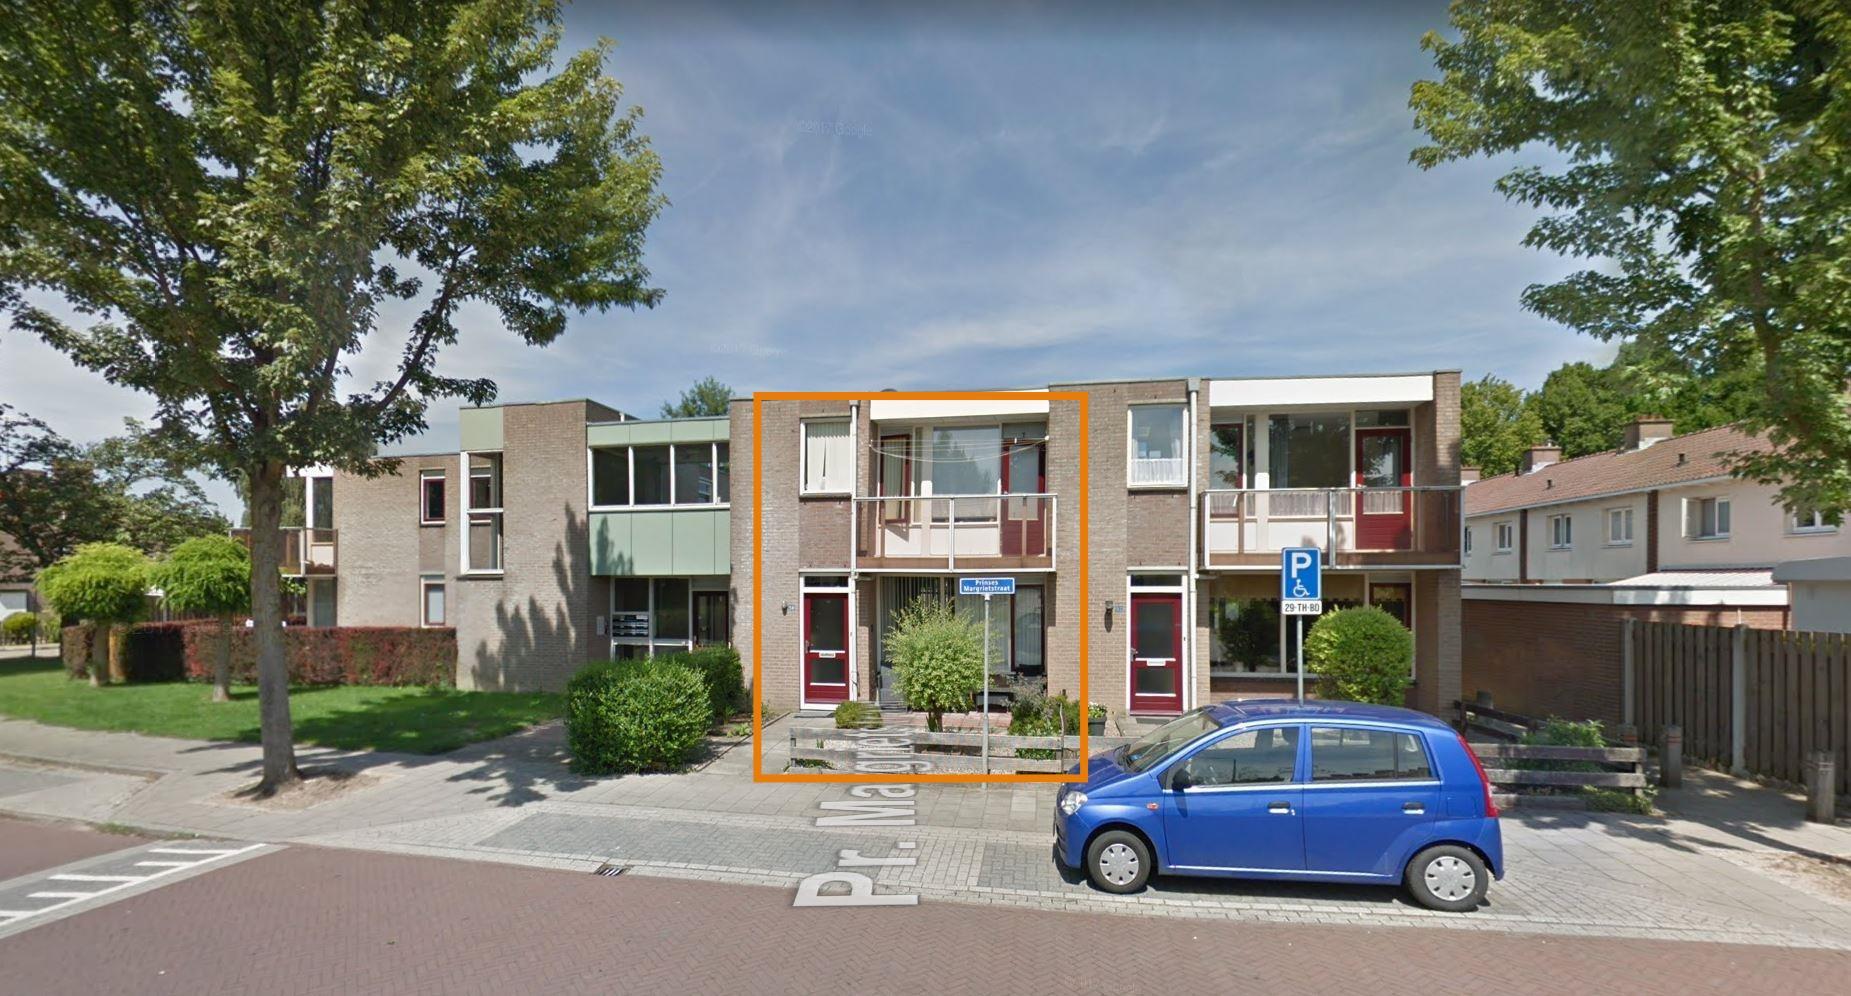 Pr. Margrietstraat 54, 6661 WZ Elst, Nederland